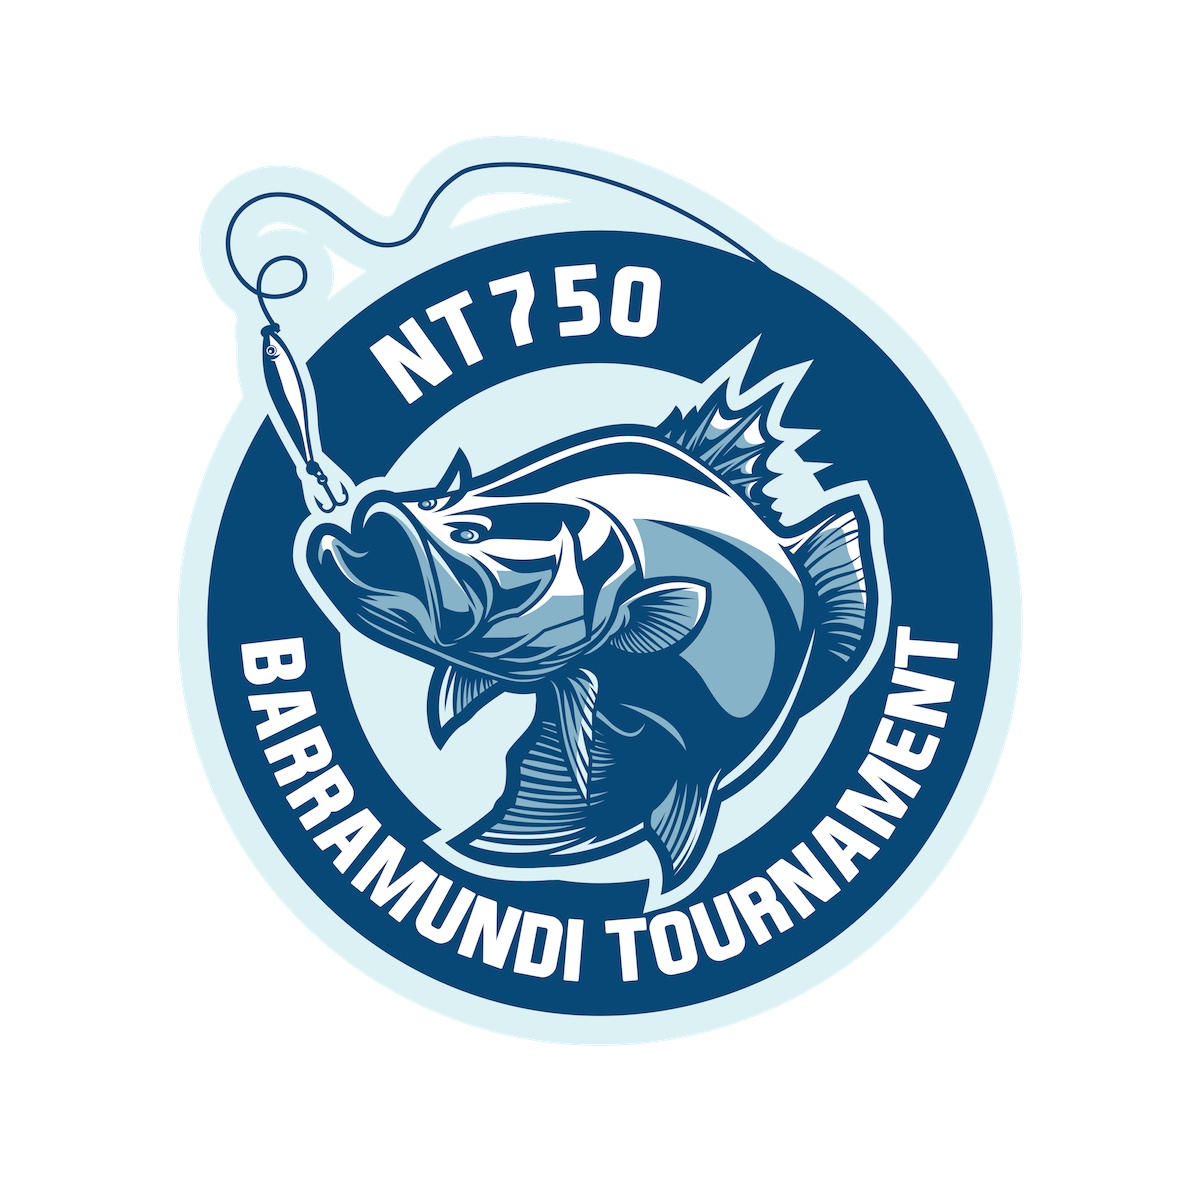 NT750 Barramundi Fishing Tournament